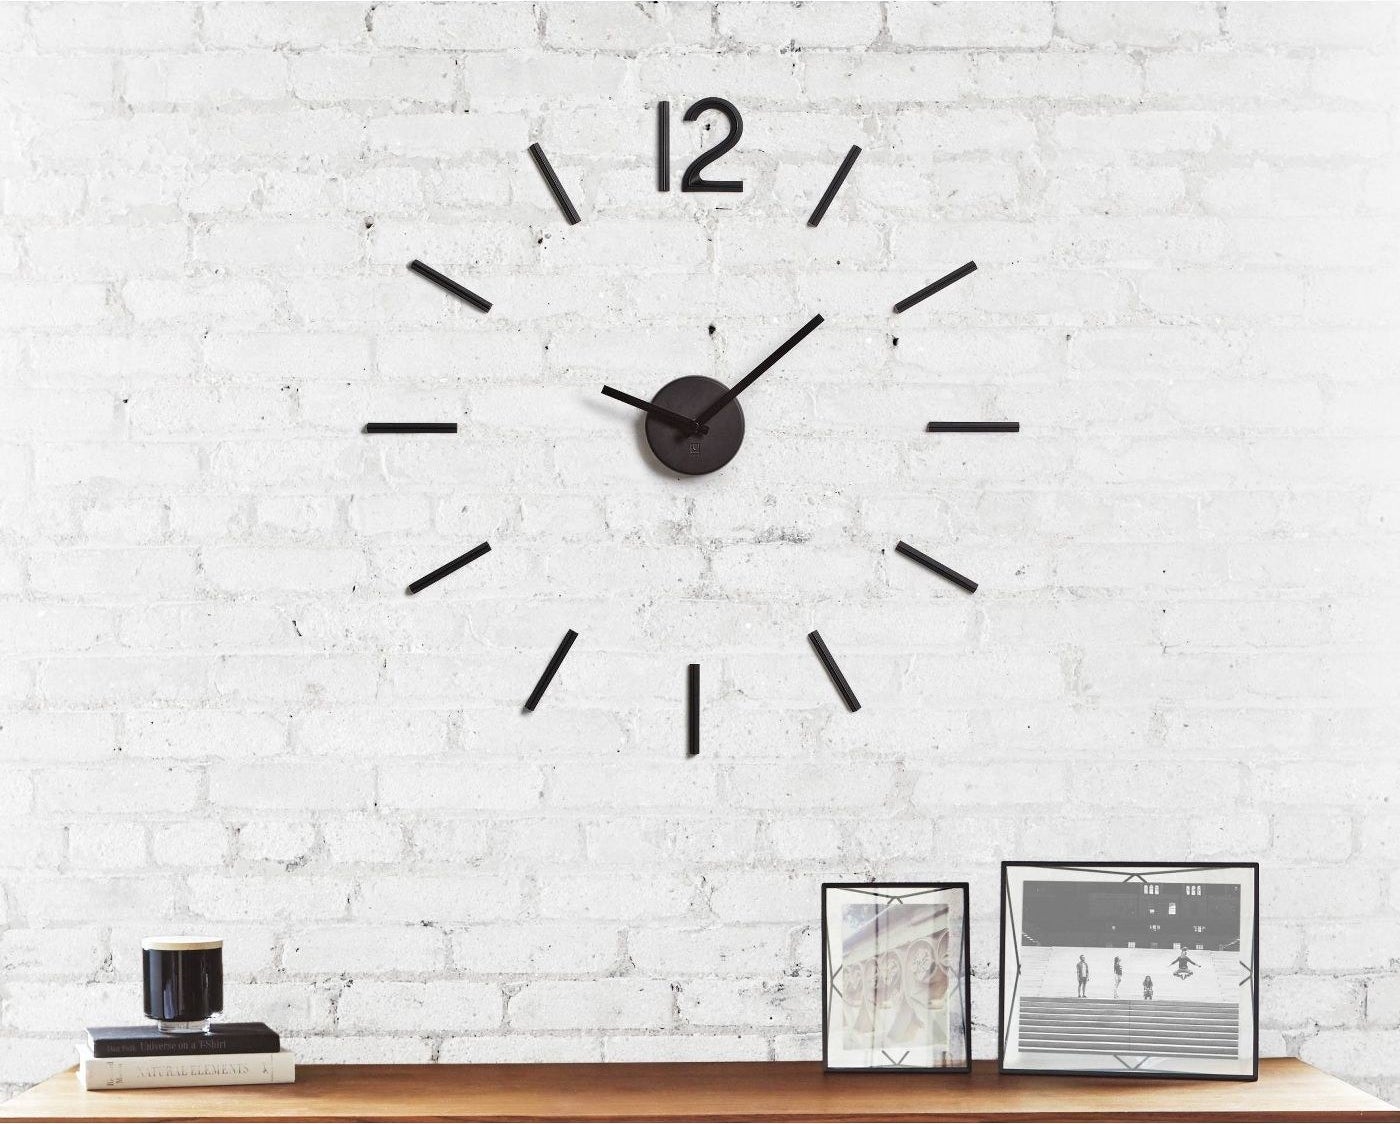 A modern black clock on a white brick wall